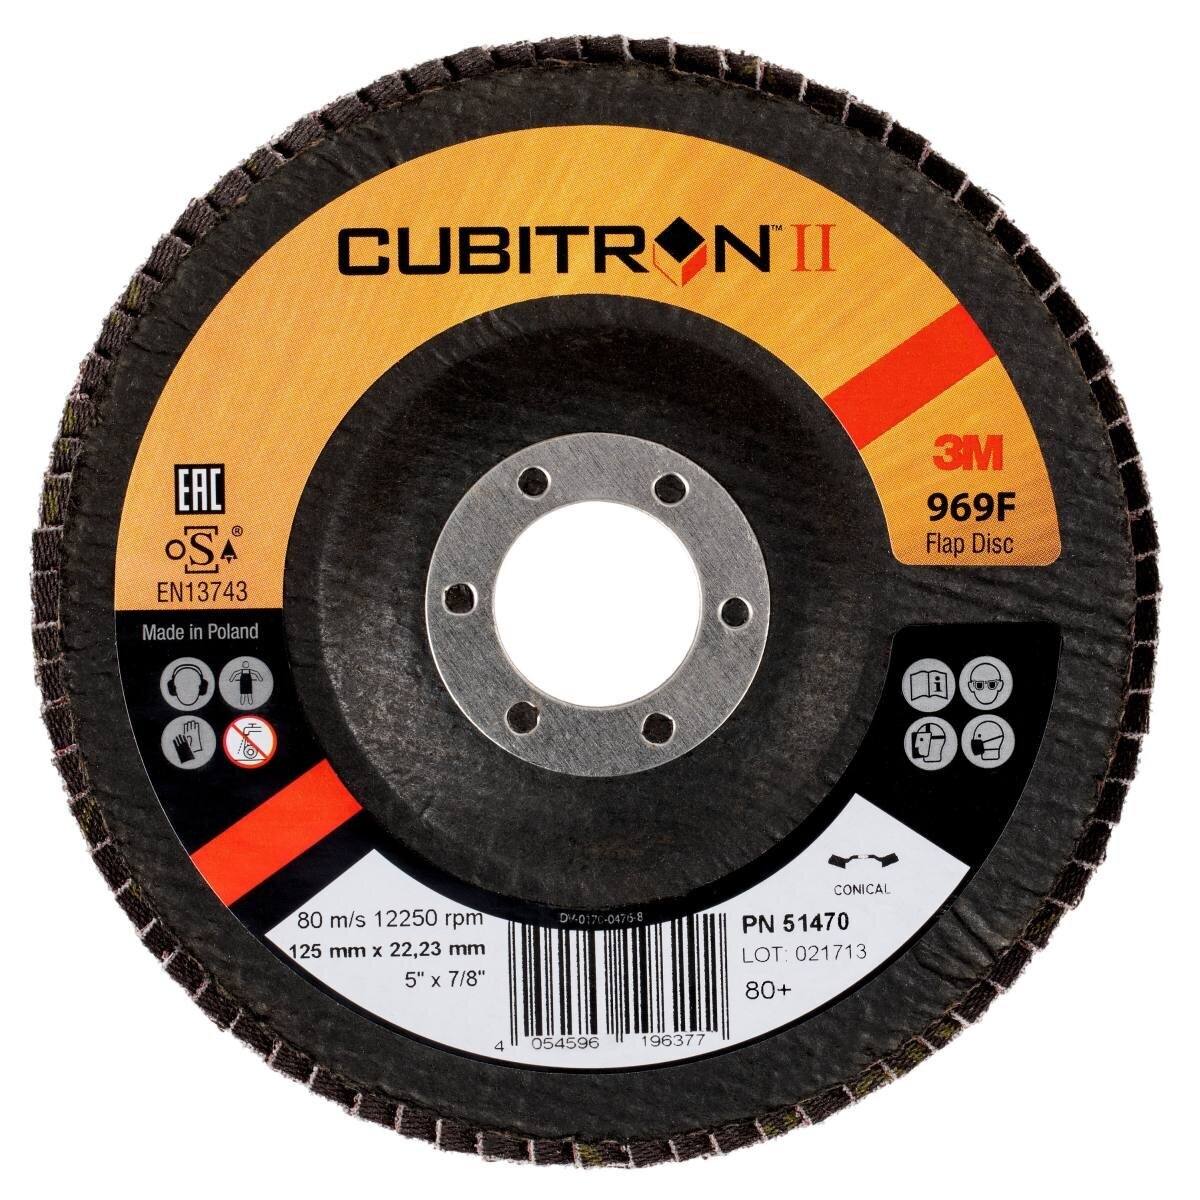 3M 969F Cubitron II flap discs d=125mm P80 #51470 conical